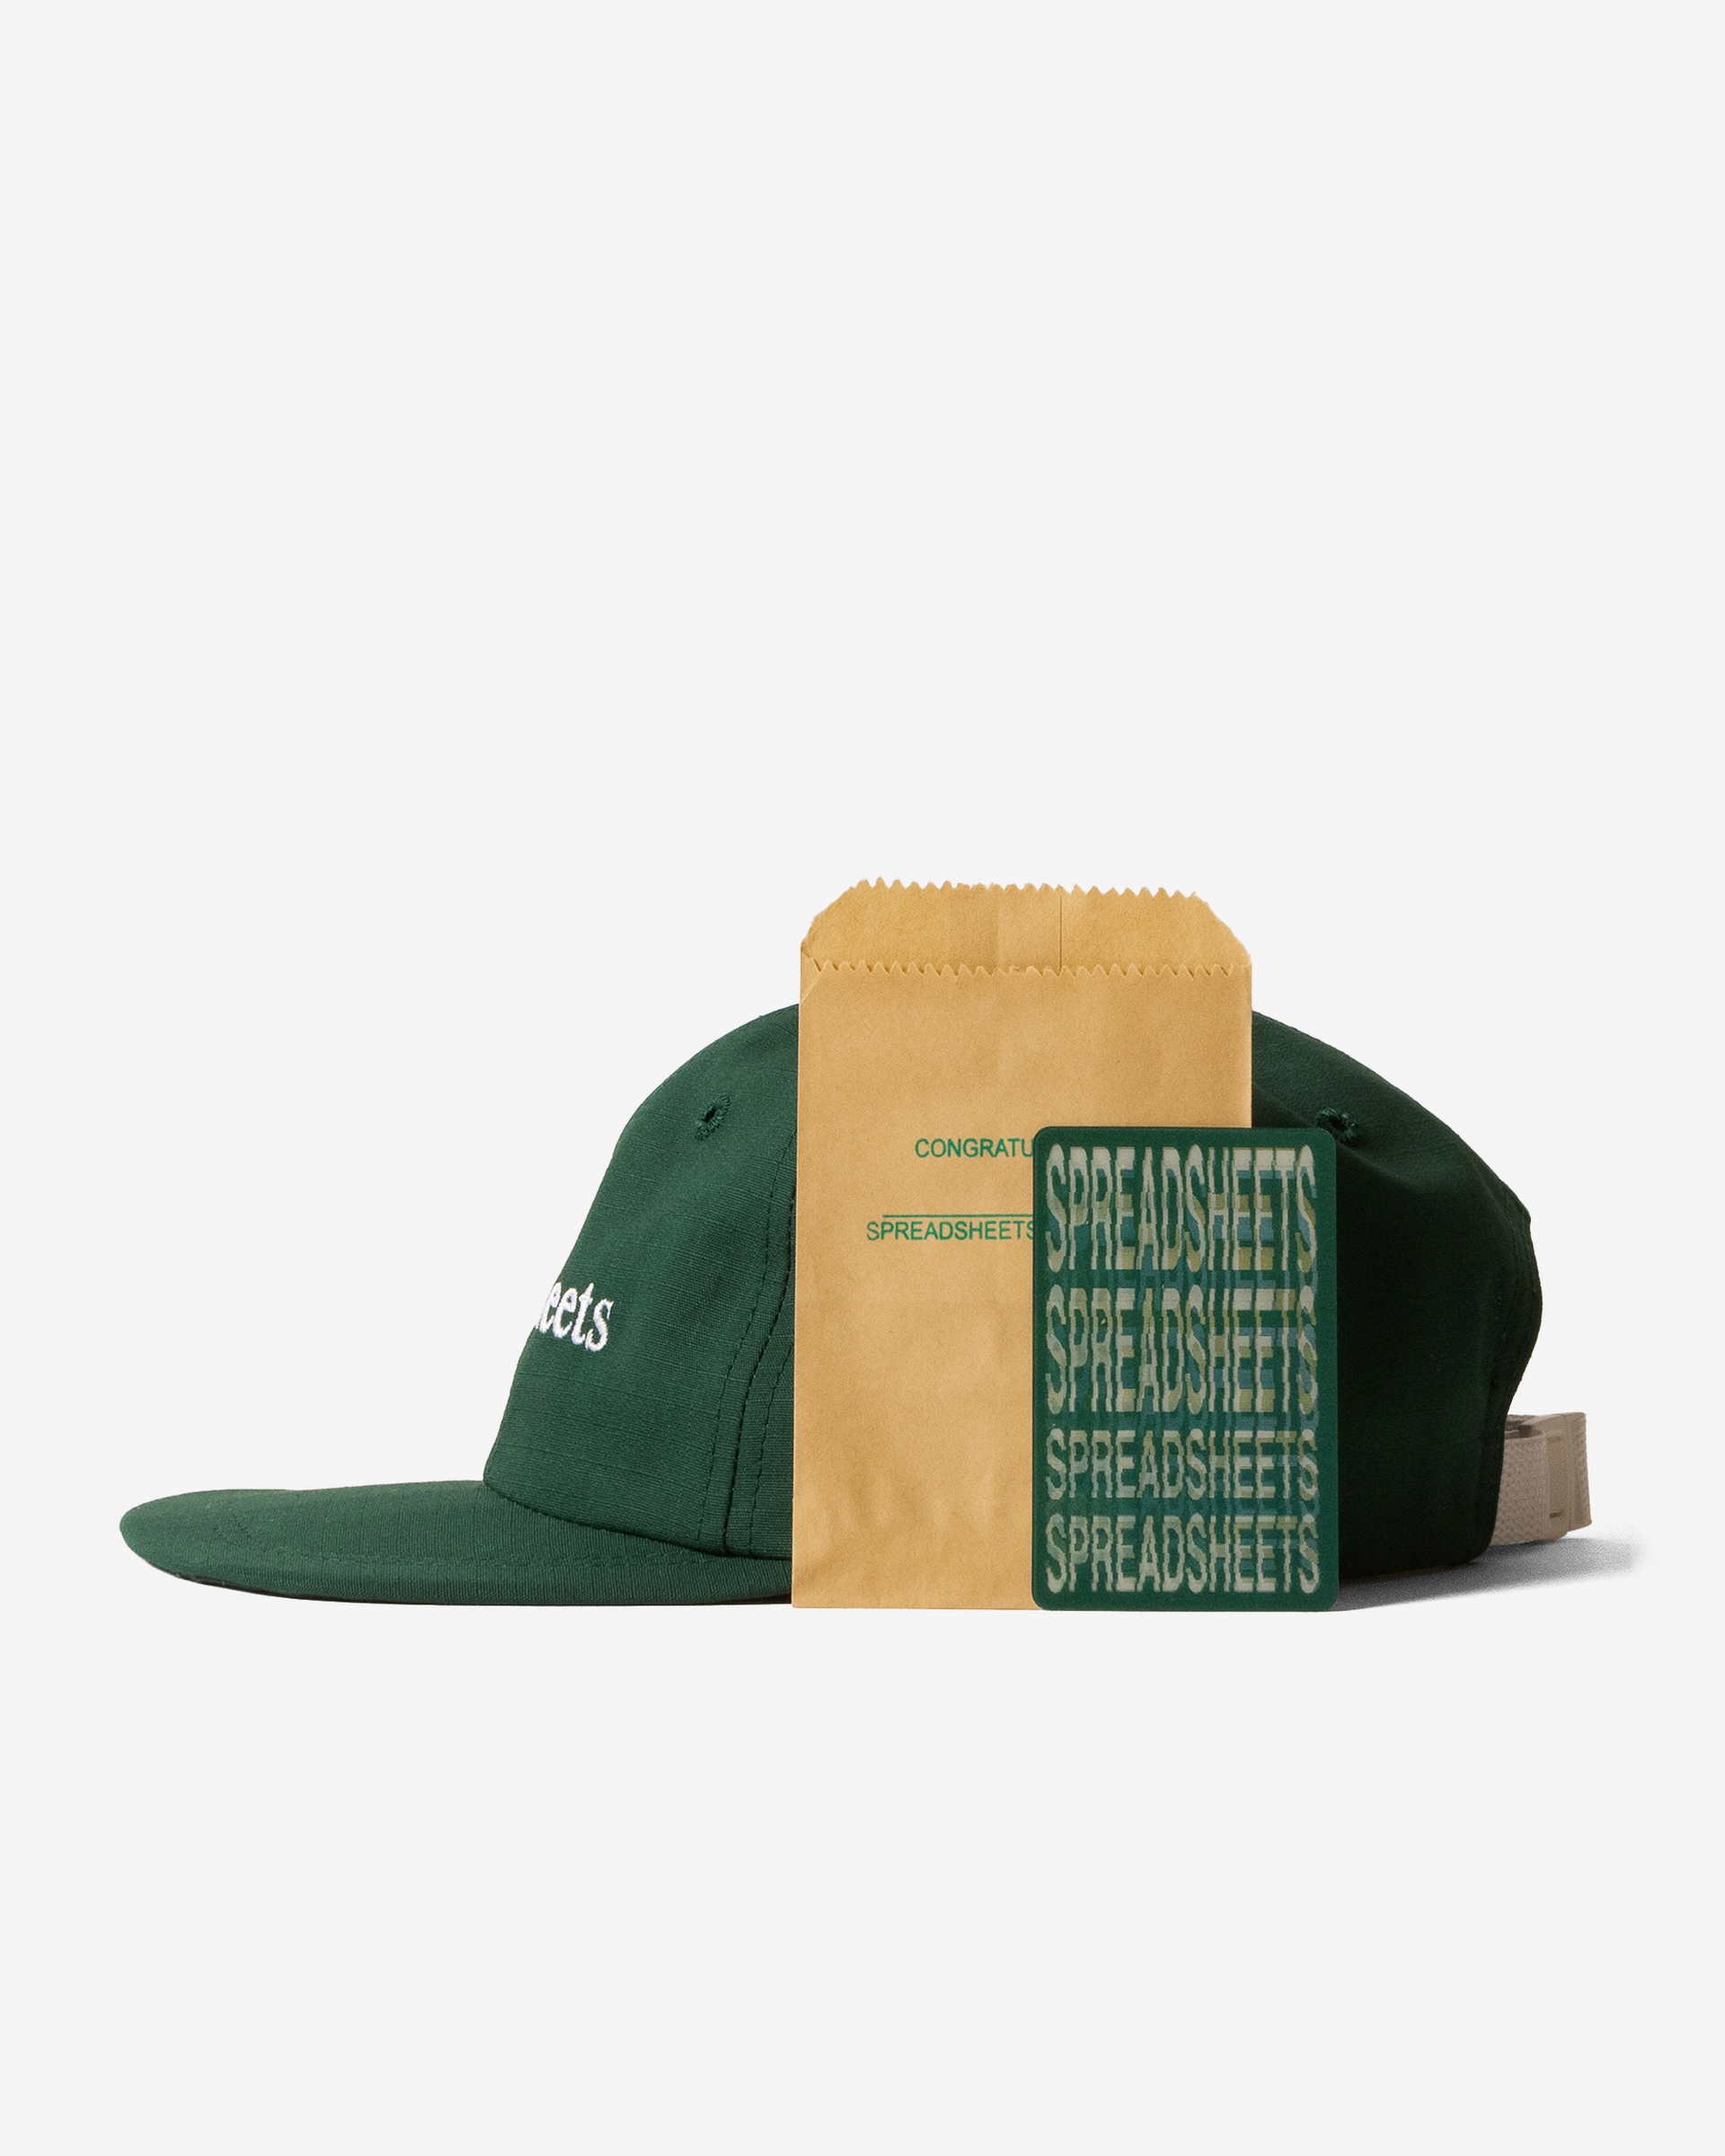 Supreme Green Hats for Men